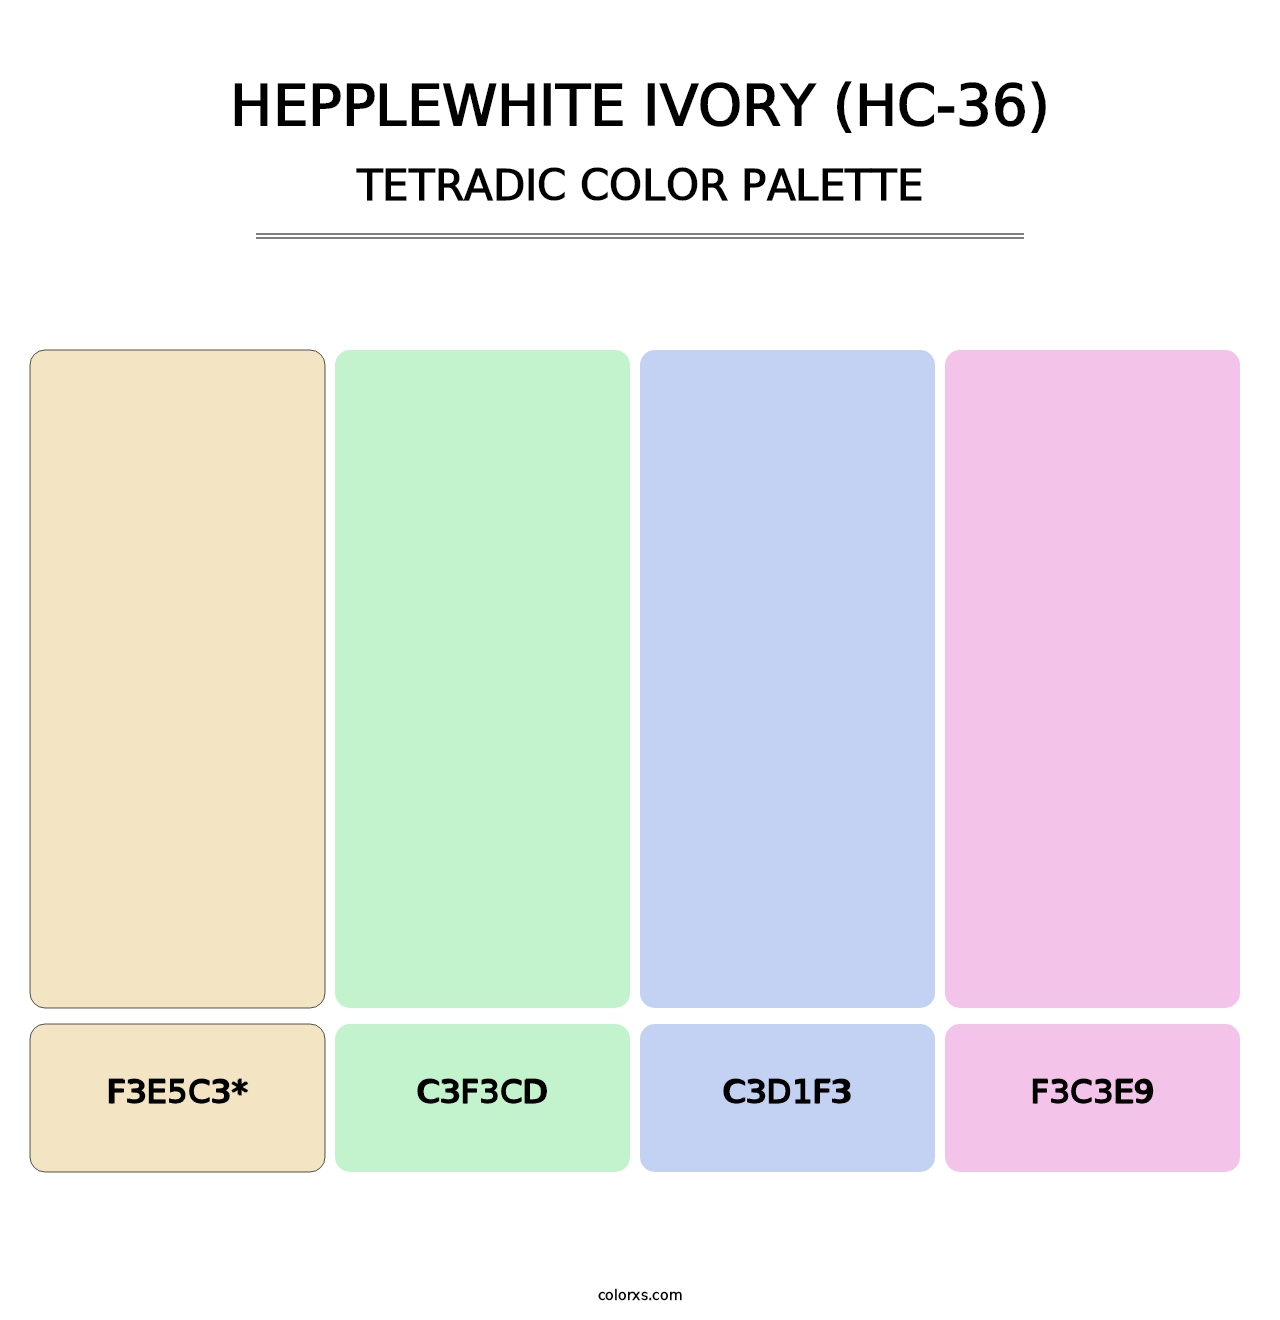 Hepplewhite Ivory (HC-36) - Tetradic Color Palette